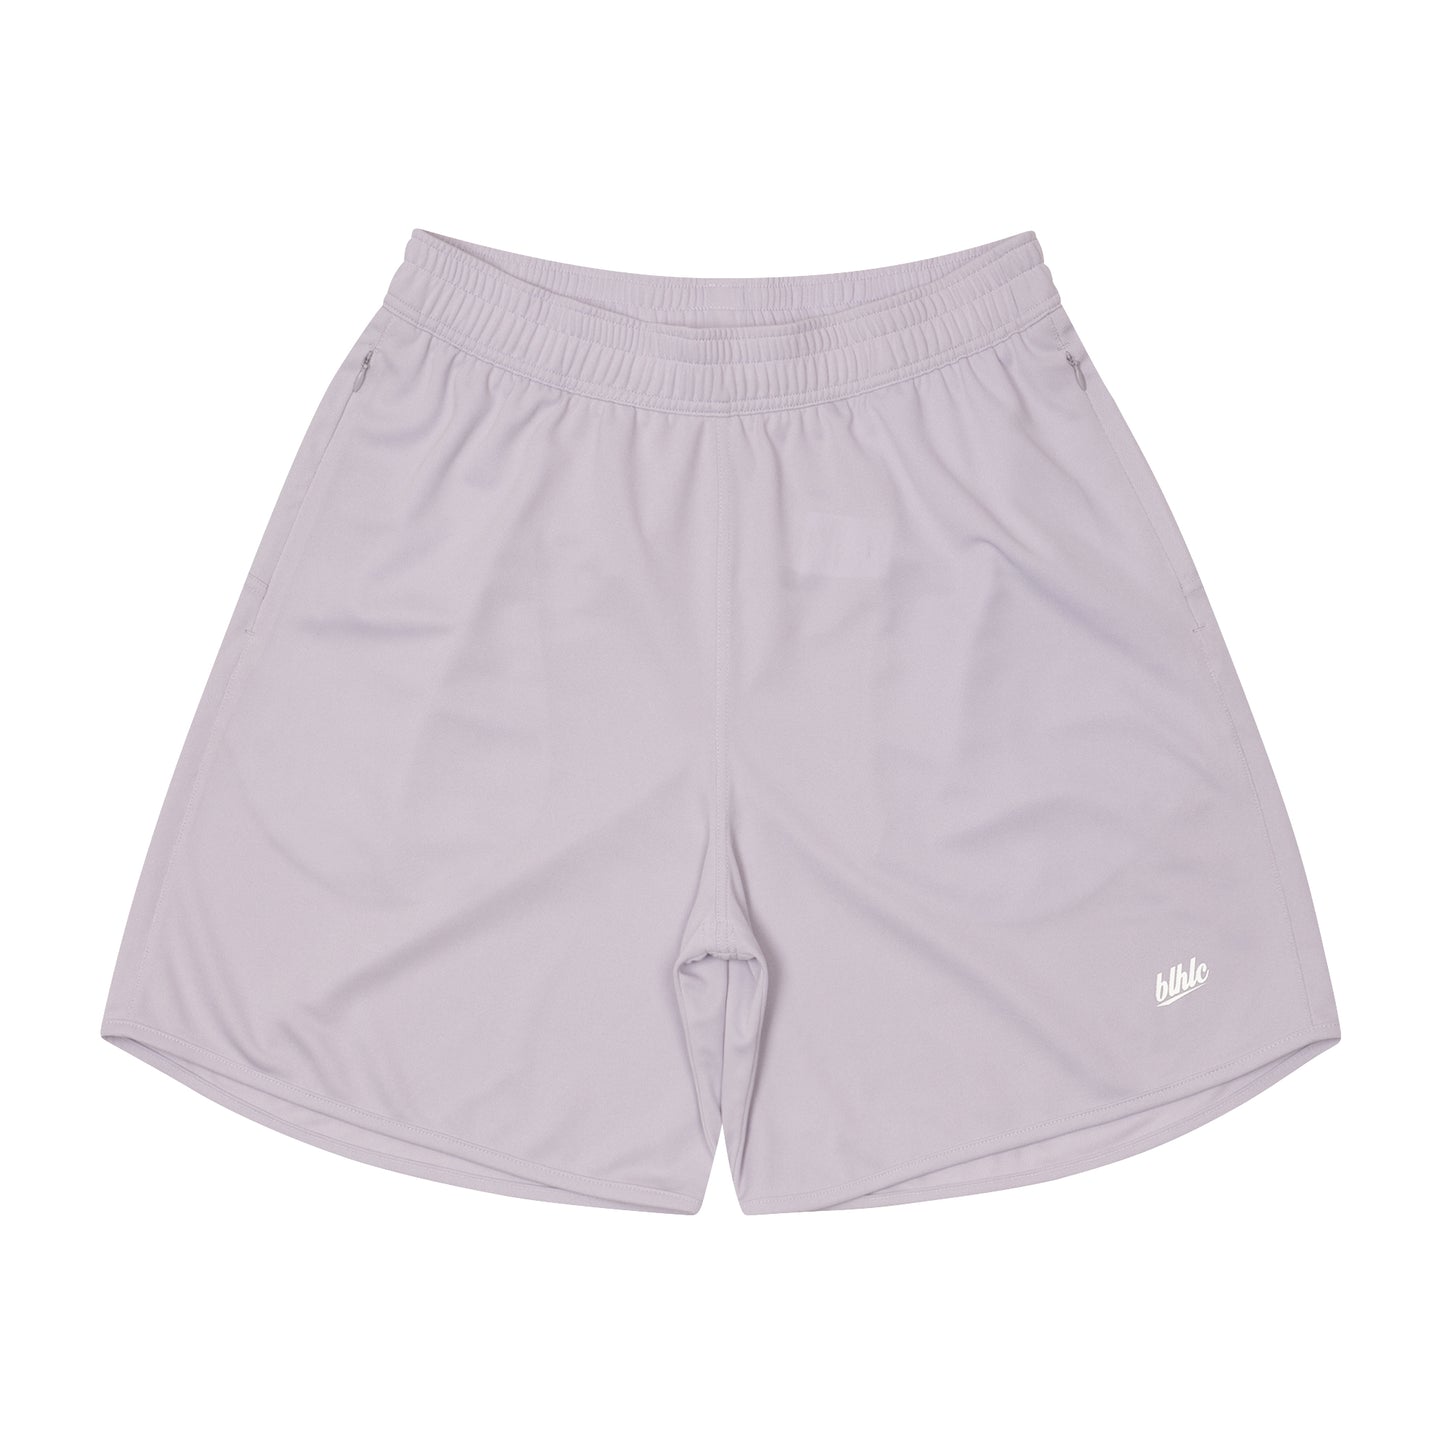 Basic Zip Shorts (lavender/white)